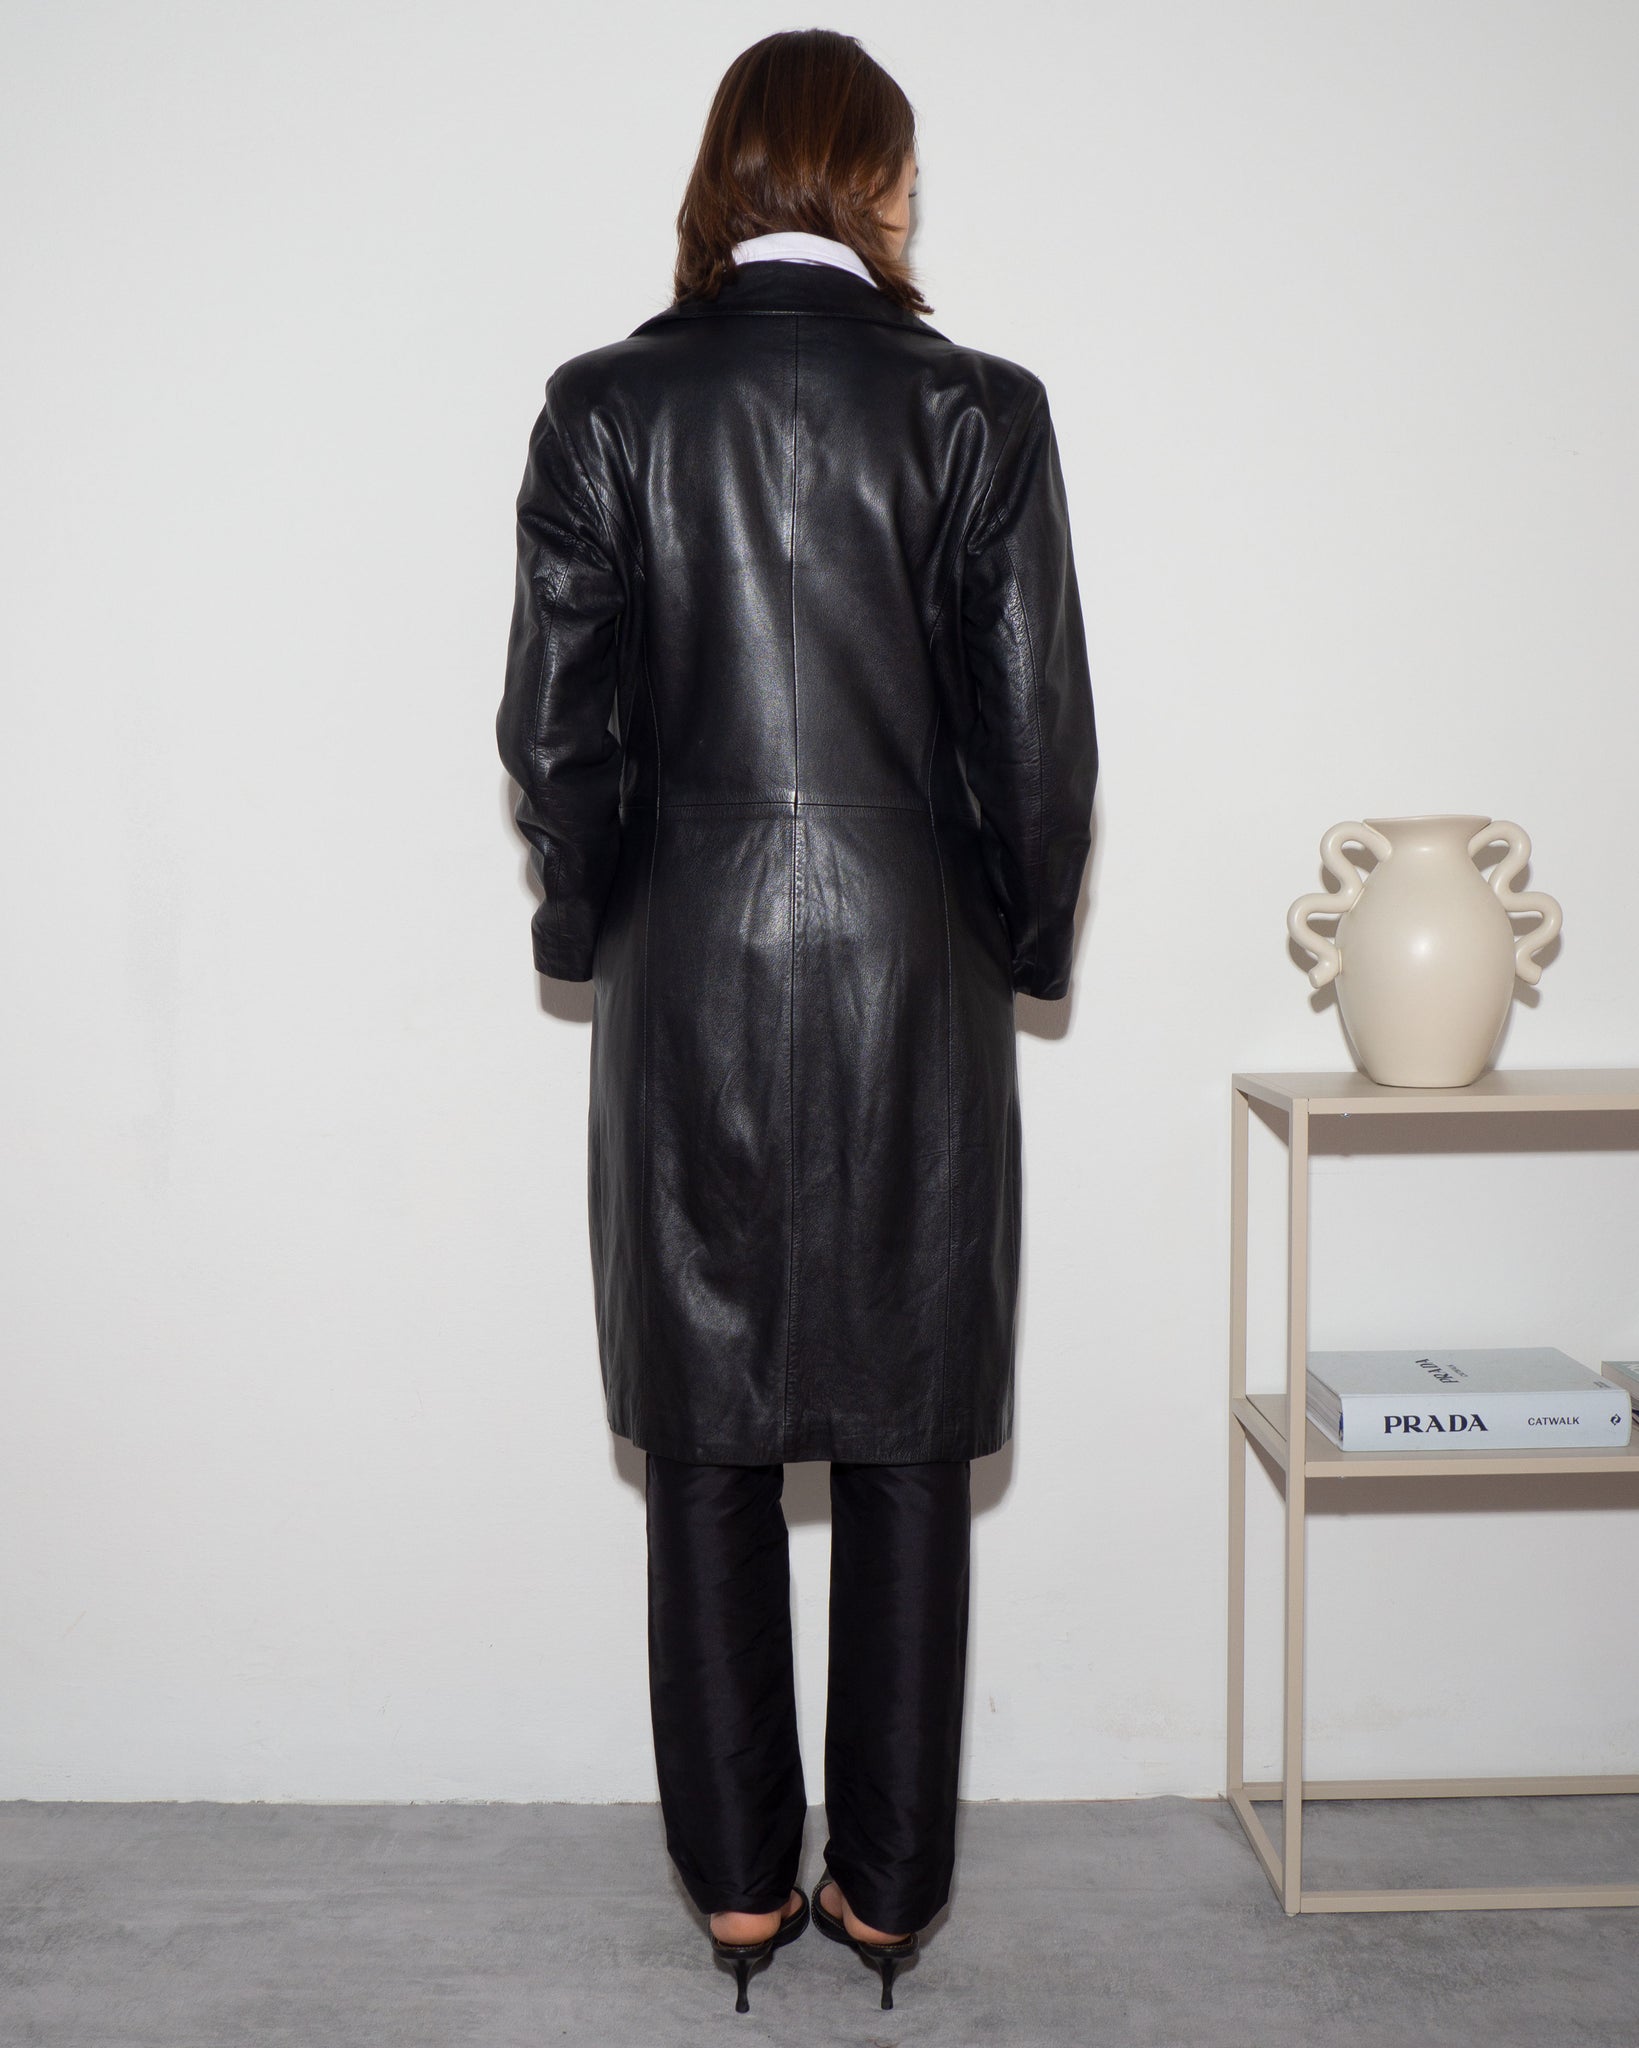 Gianfranco Ferre Leather Coat